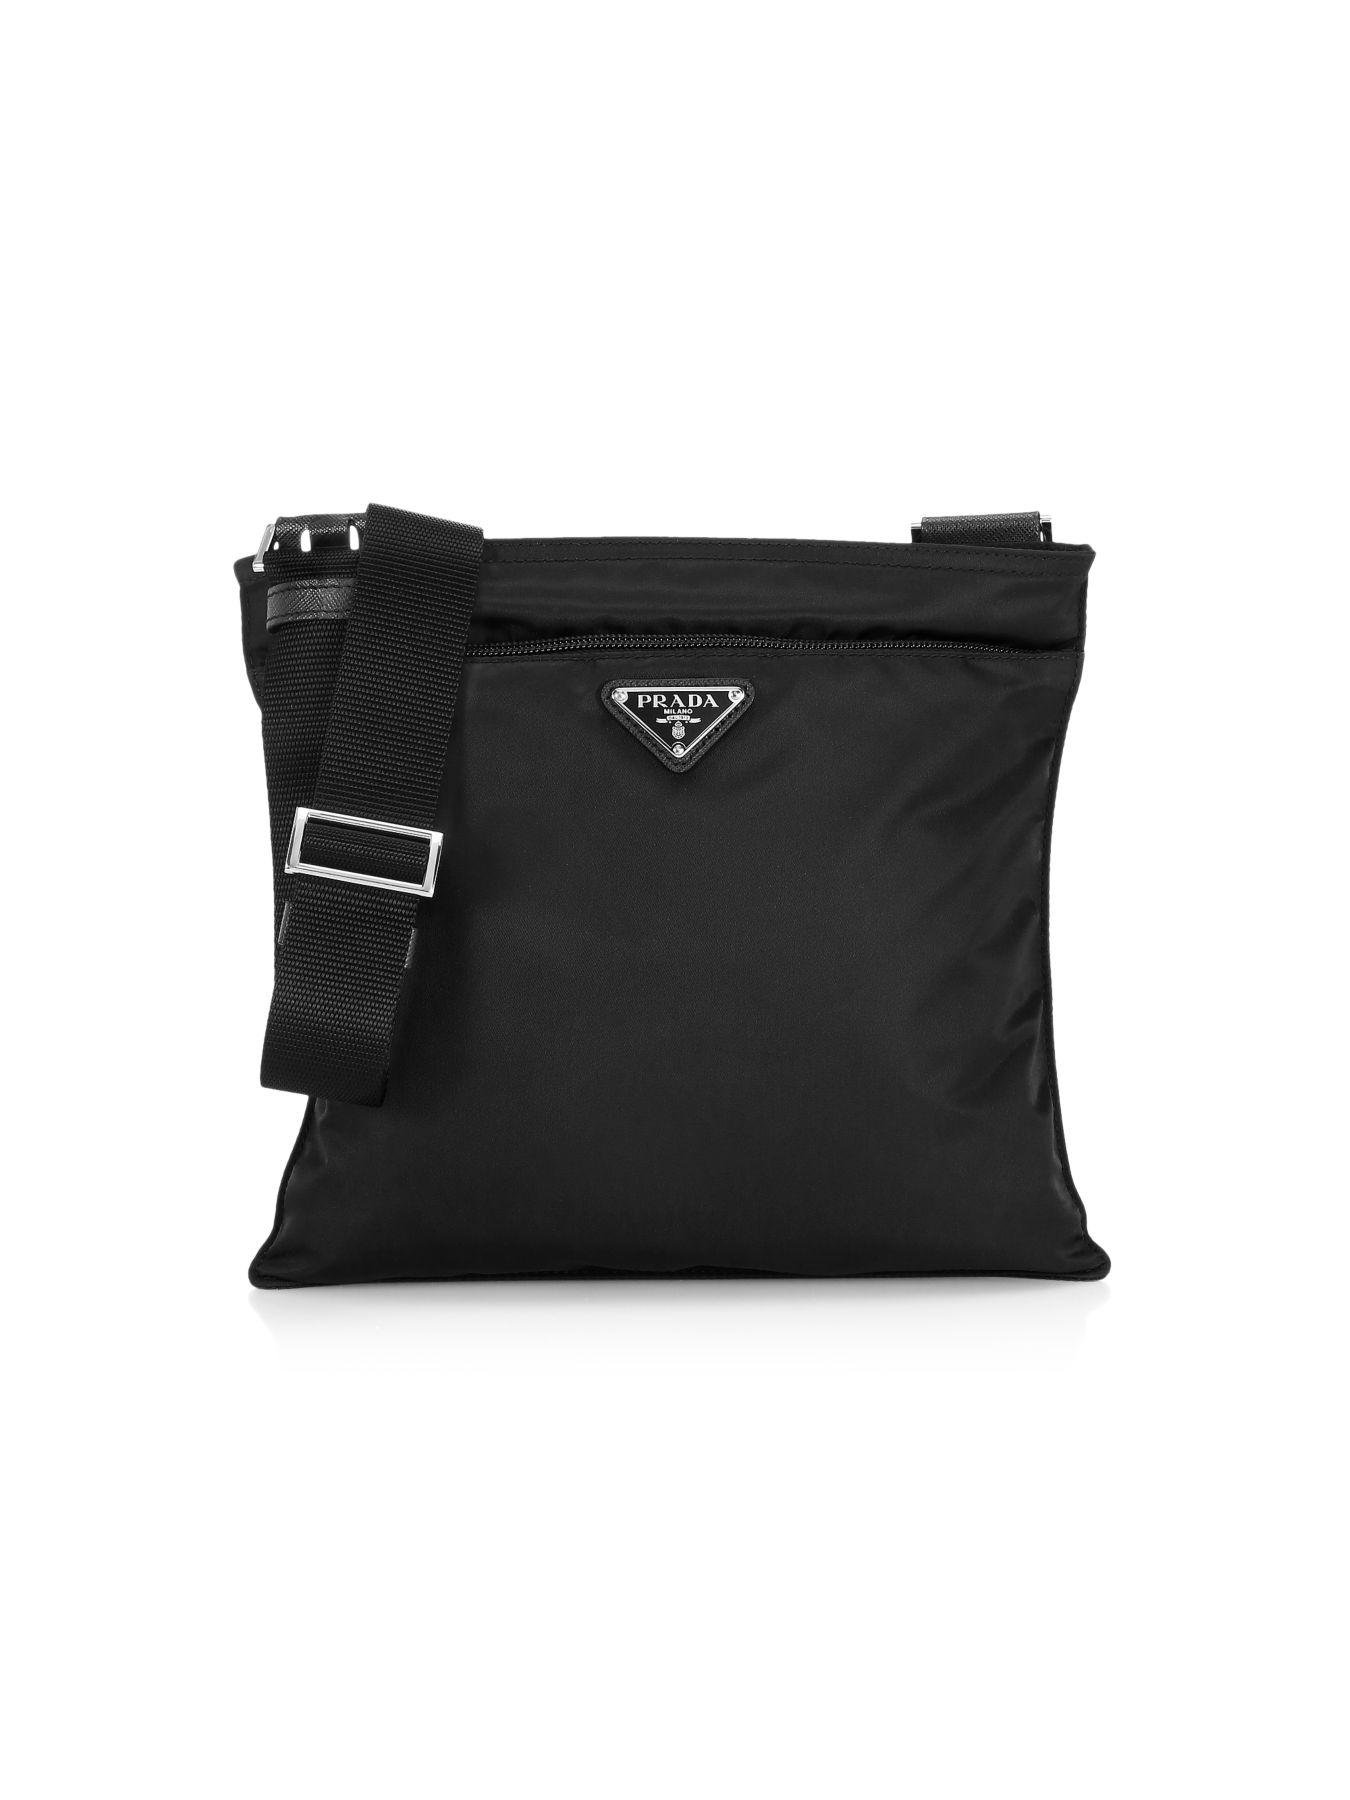 Prada Black Crossbody Bag Price | Paul Smith